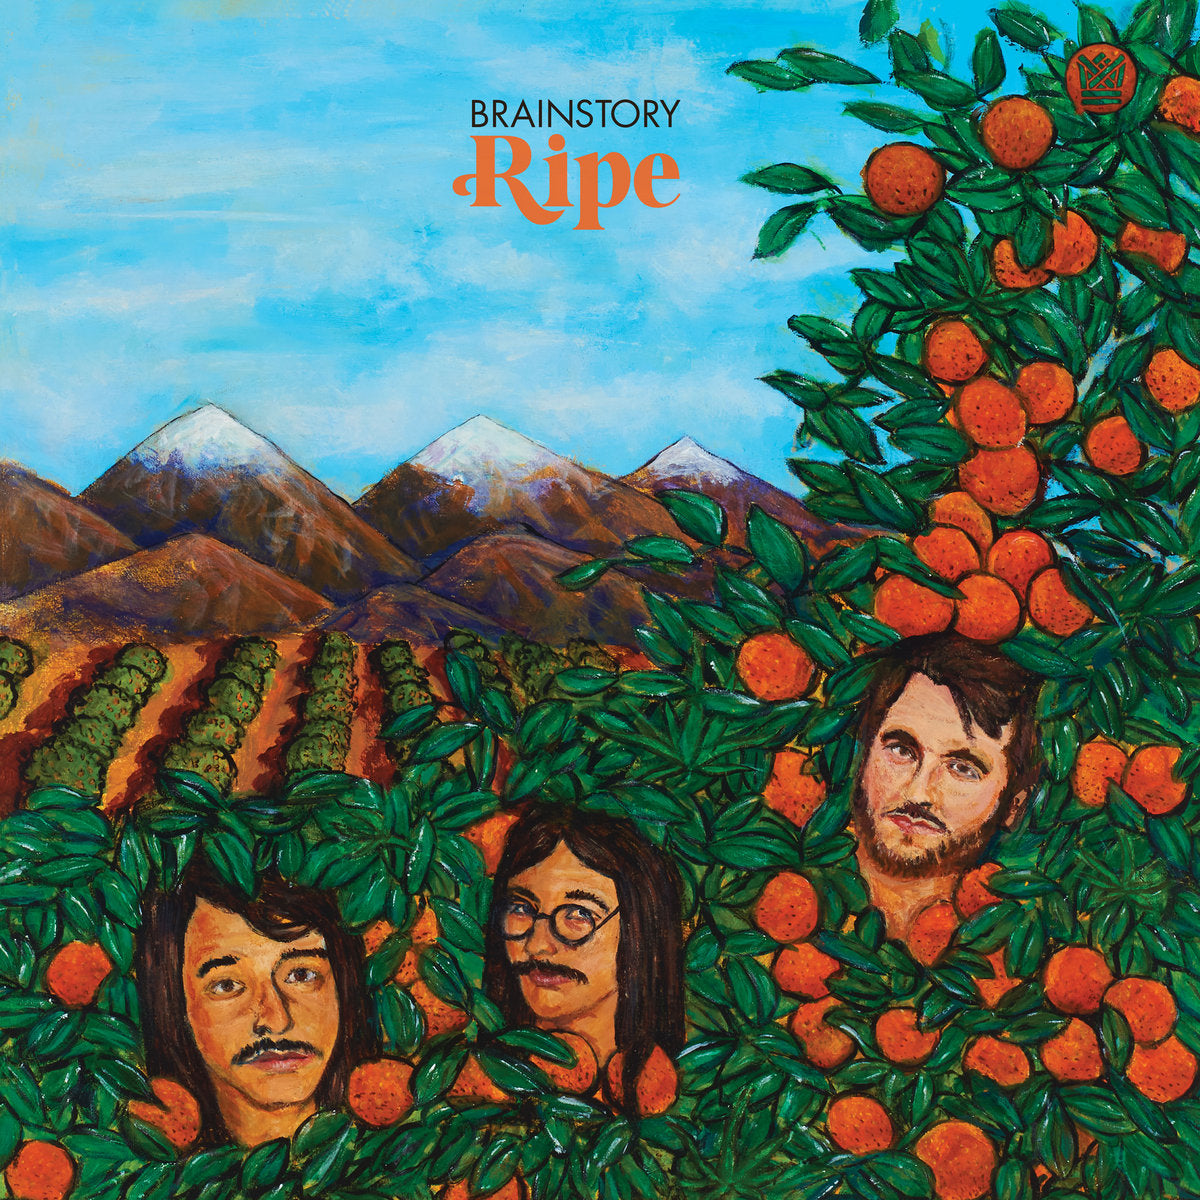 Brainstory - Ripe [Translucent Vinyl LP w/ Green & Orange Swirl]